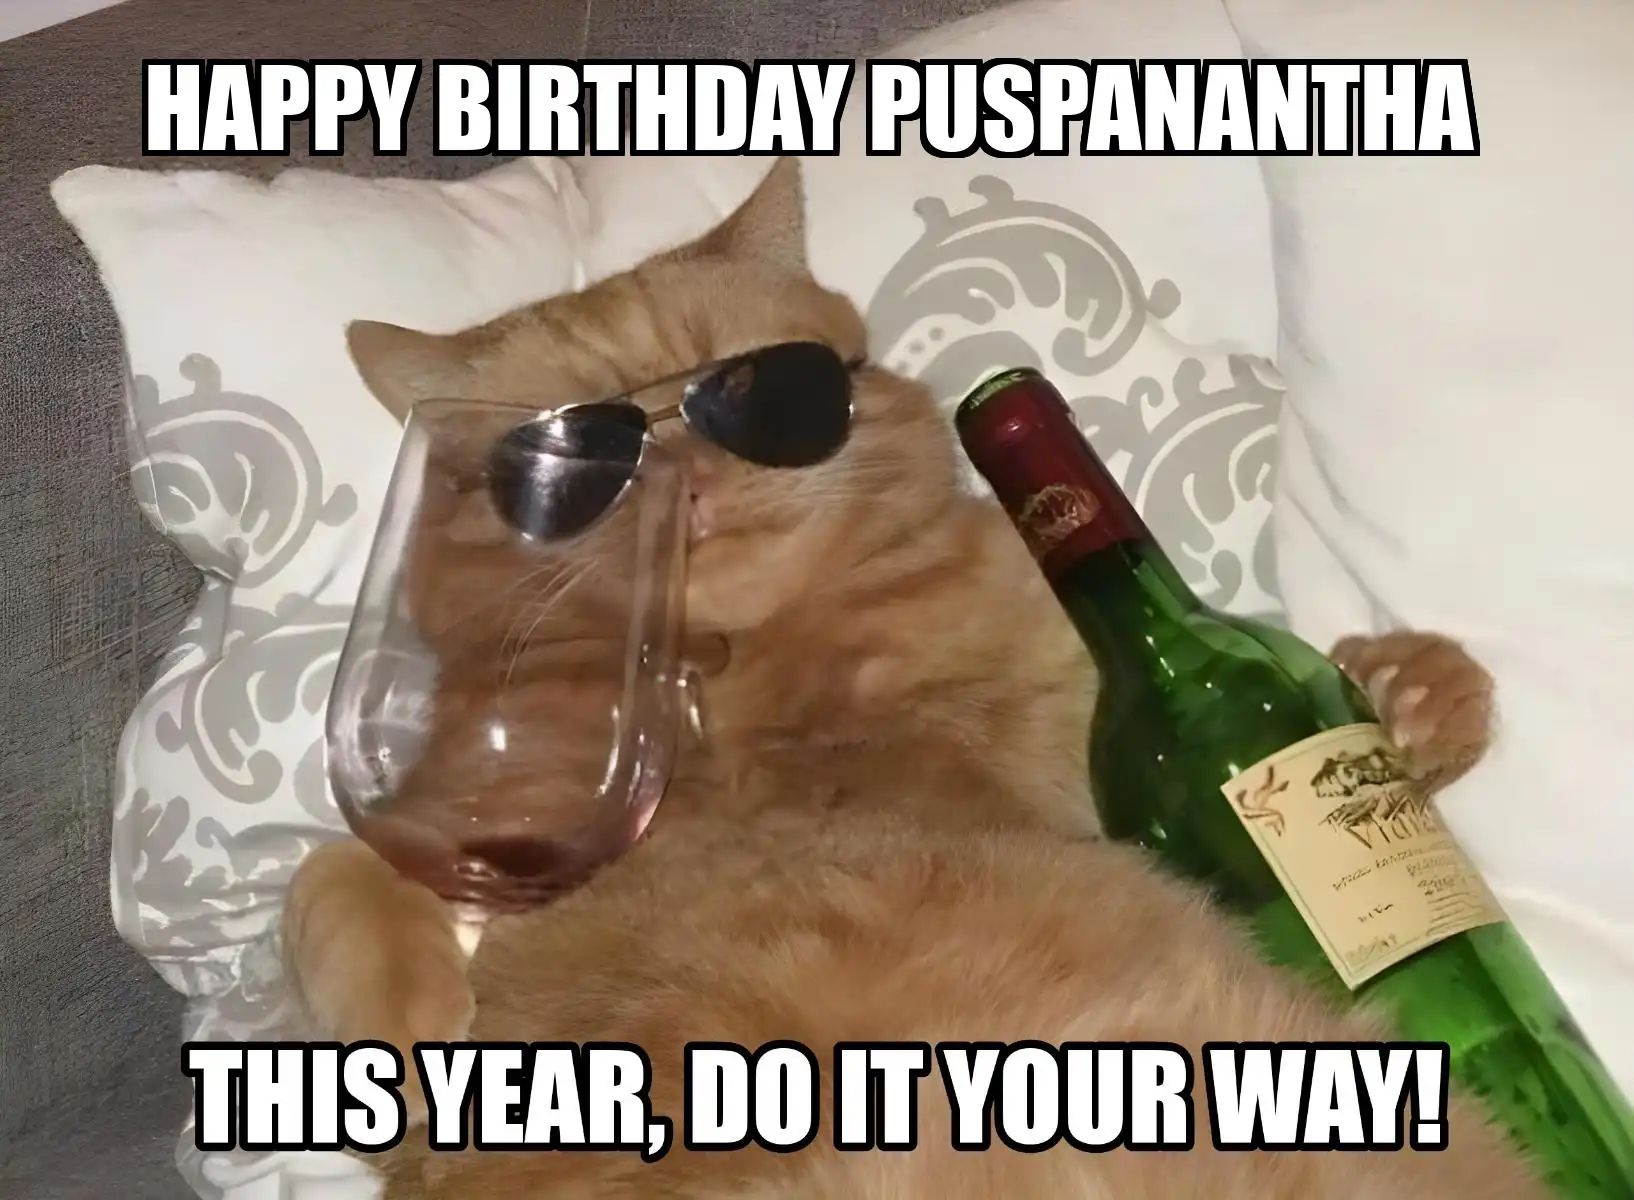 Happy Birthday Puspanantha This Year Do It Your Way Meme